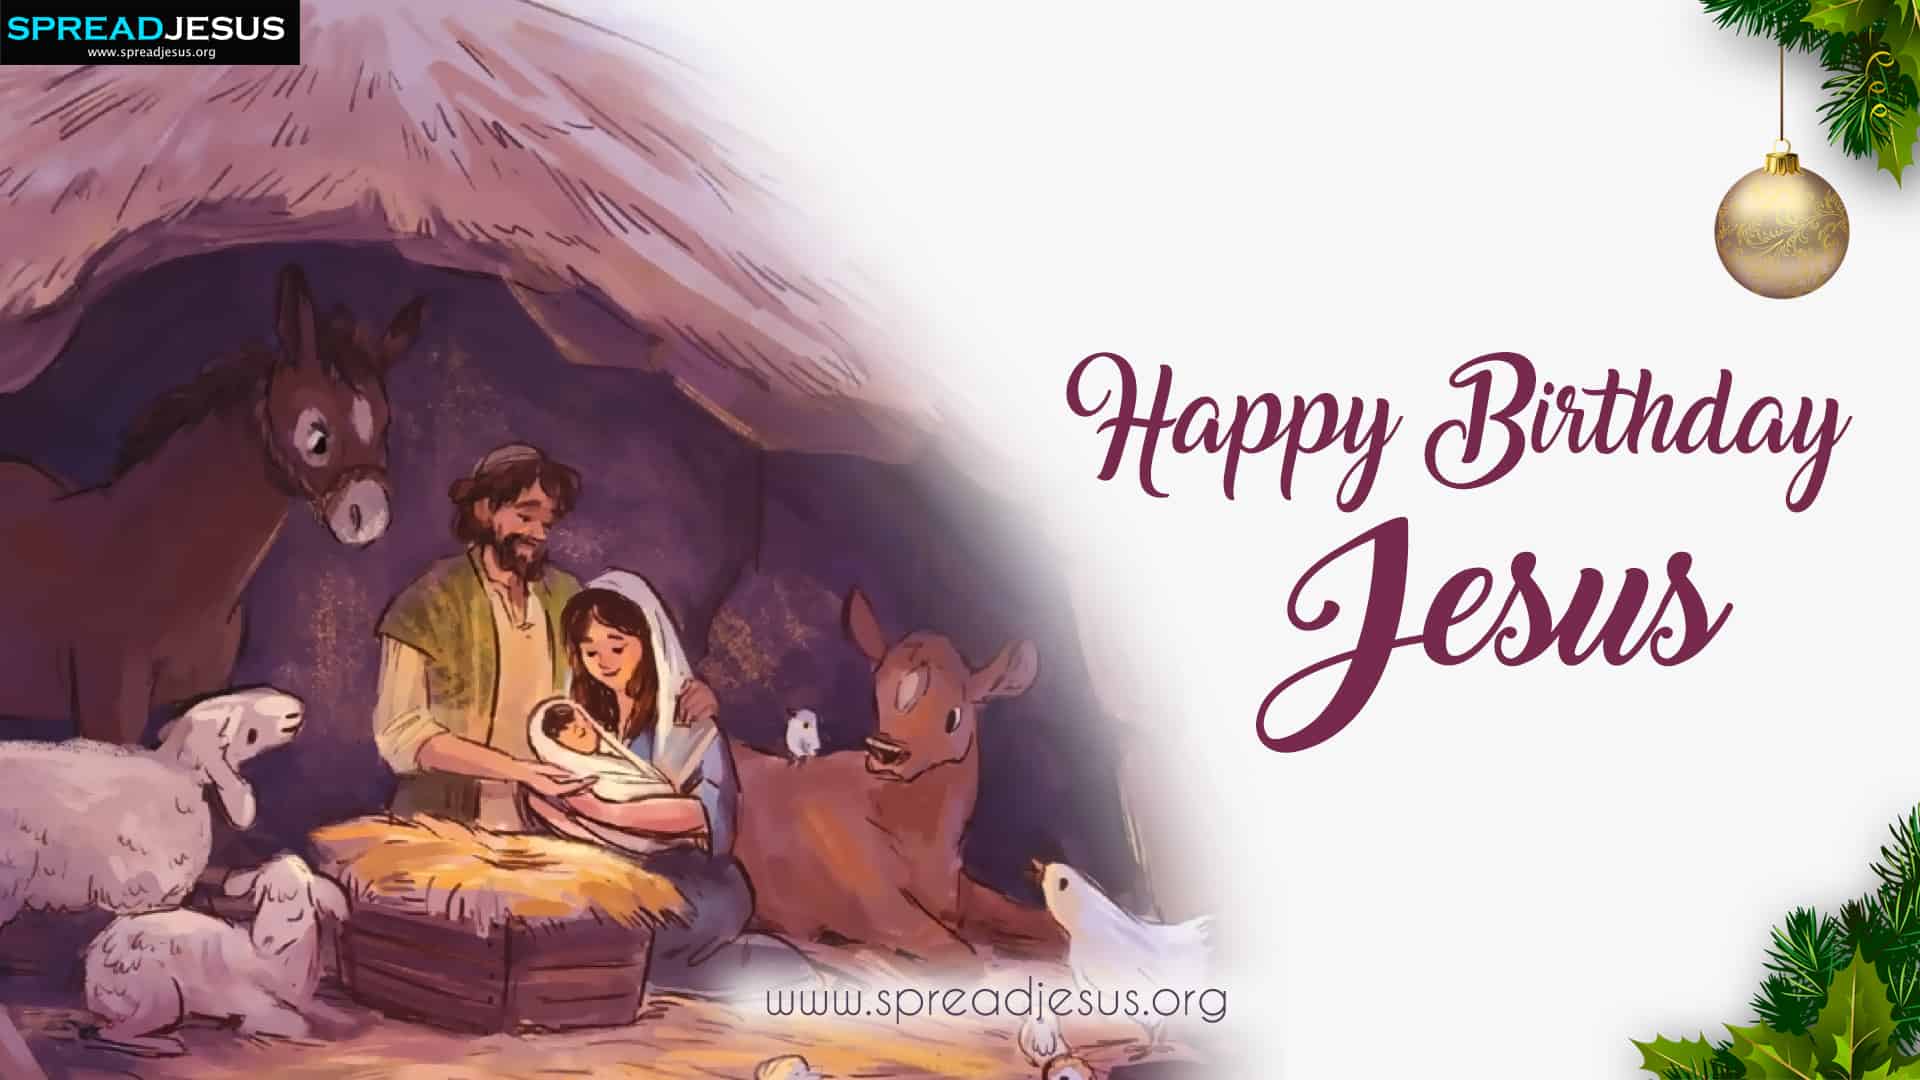 Happy Birthday Jesus-3 HD wallpapers Free Download